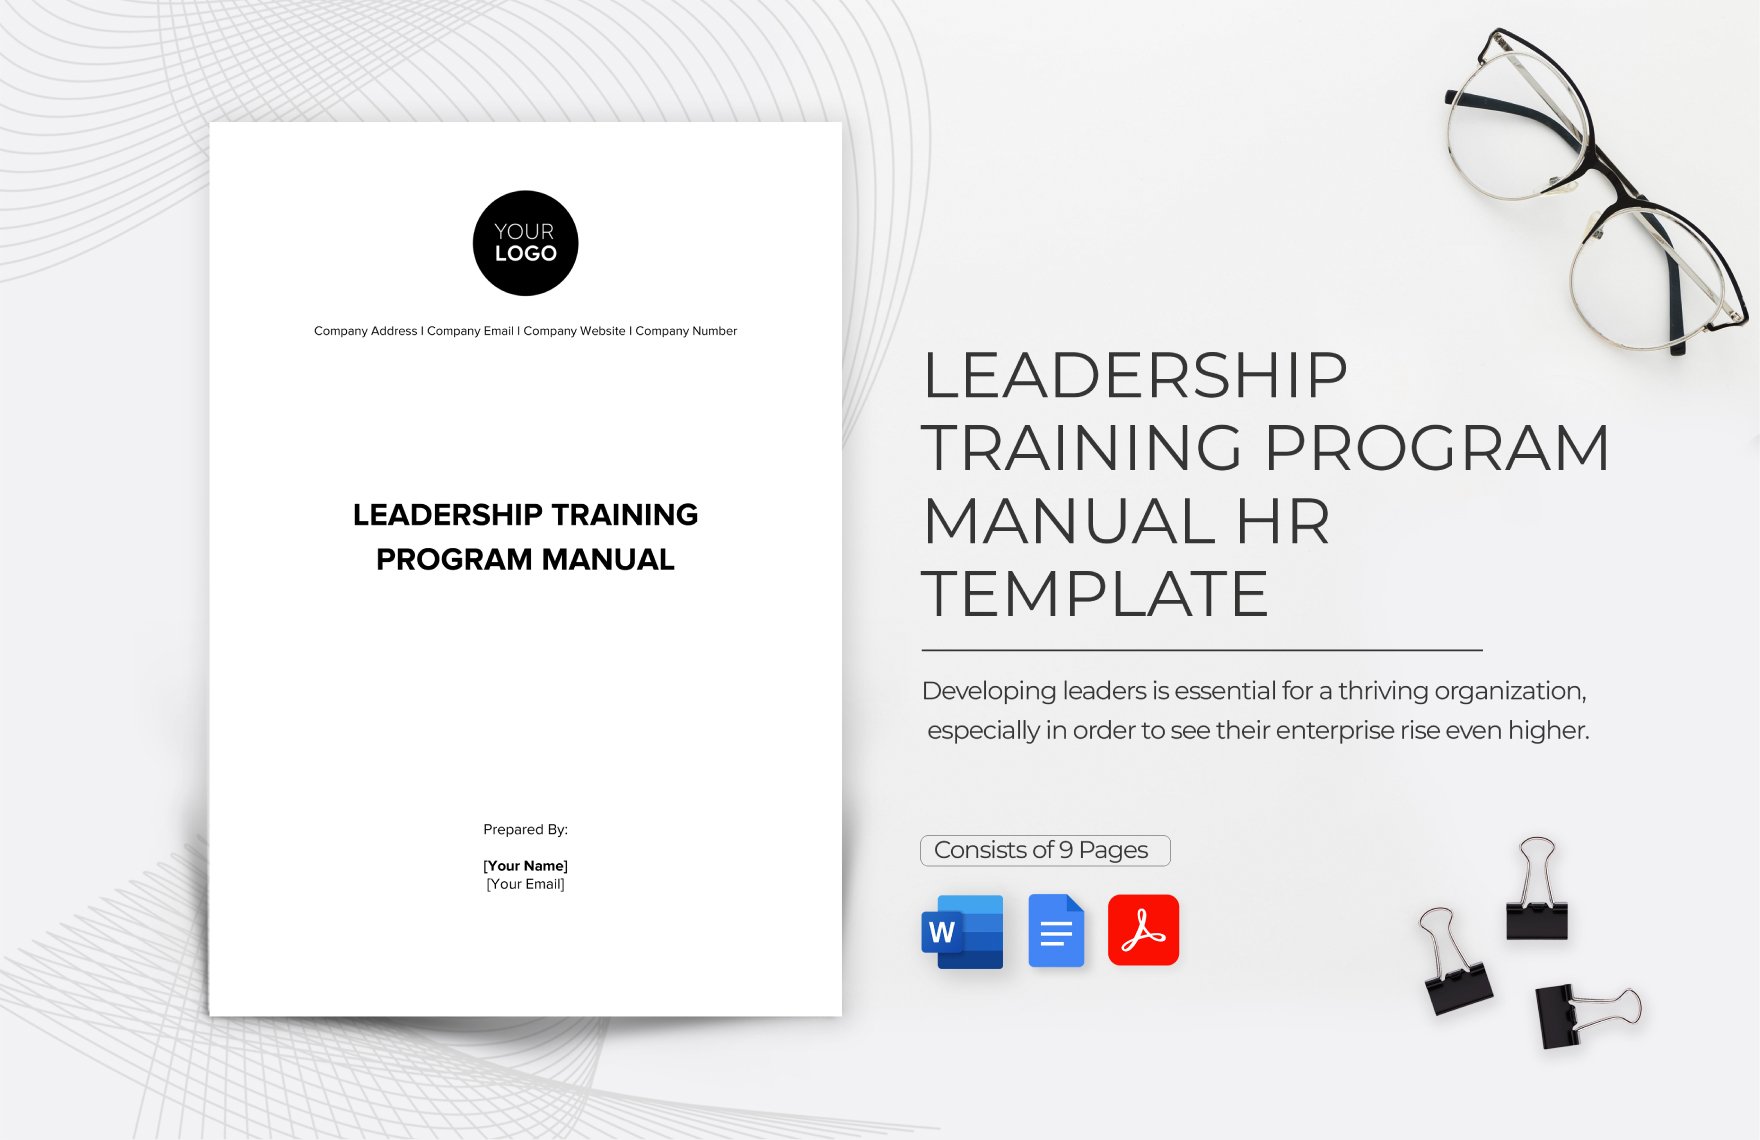 Leadership Training Program Manual HR Template in Word, Google Docs, PDF